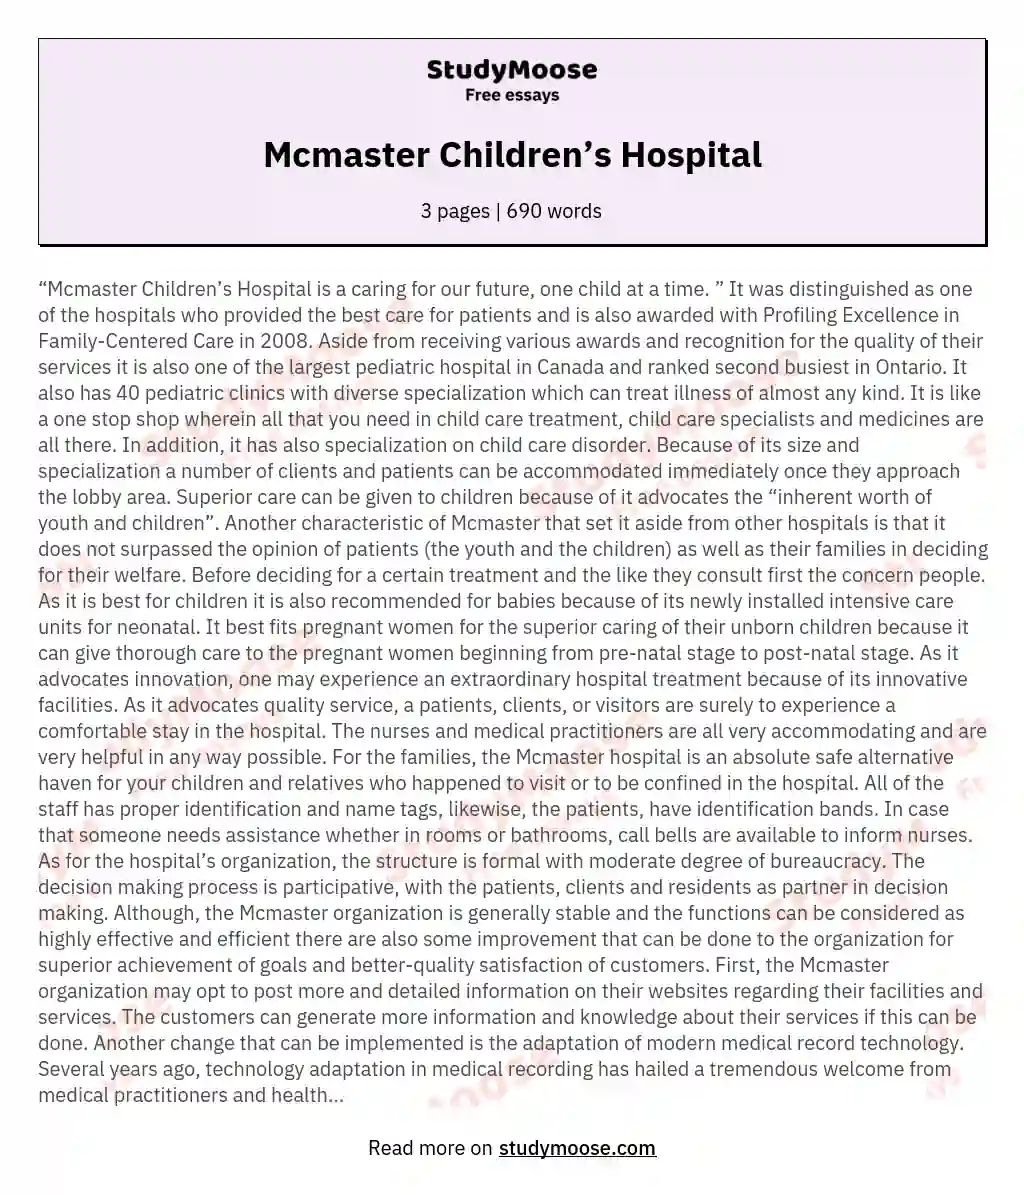 Mcmaster Children’s Hospital essay